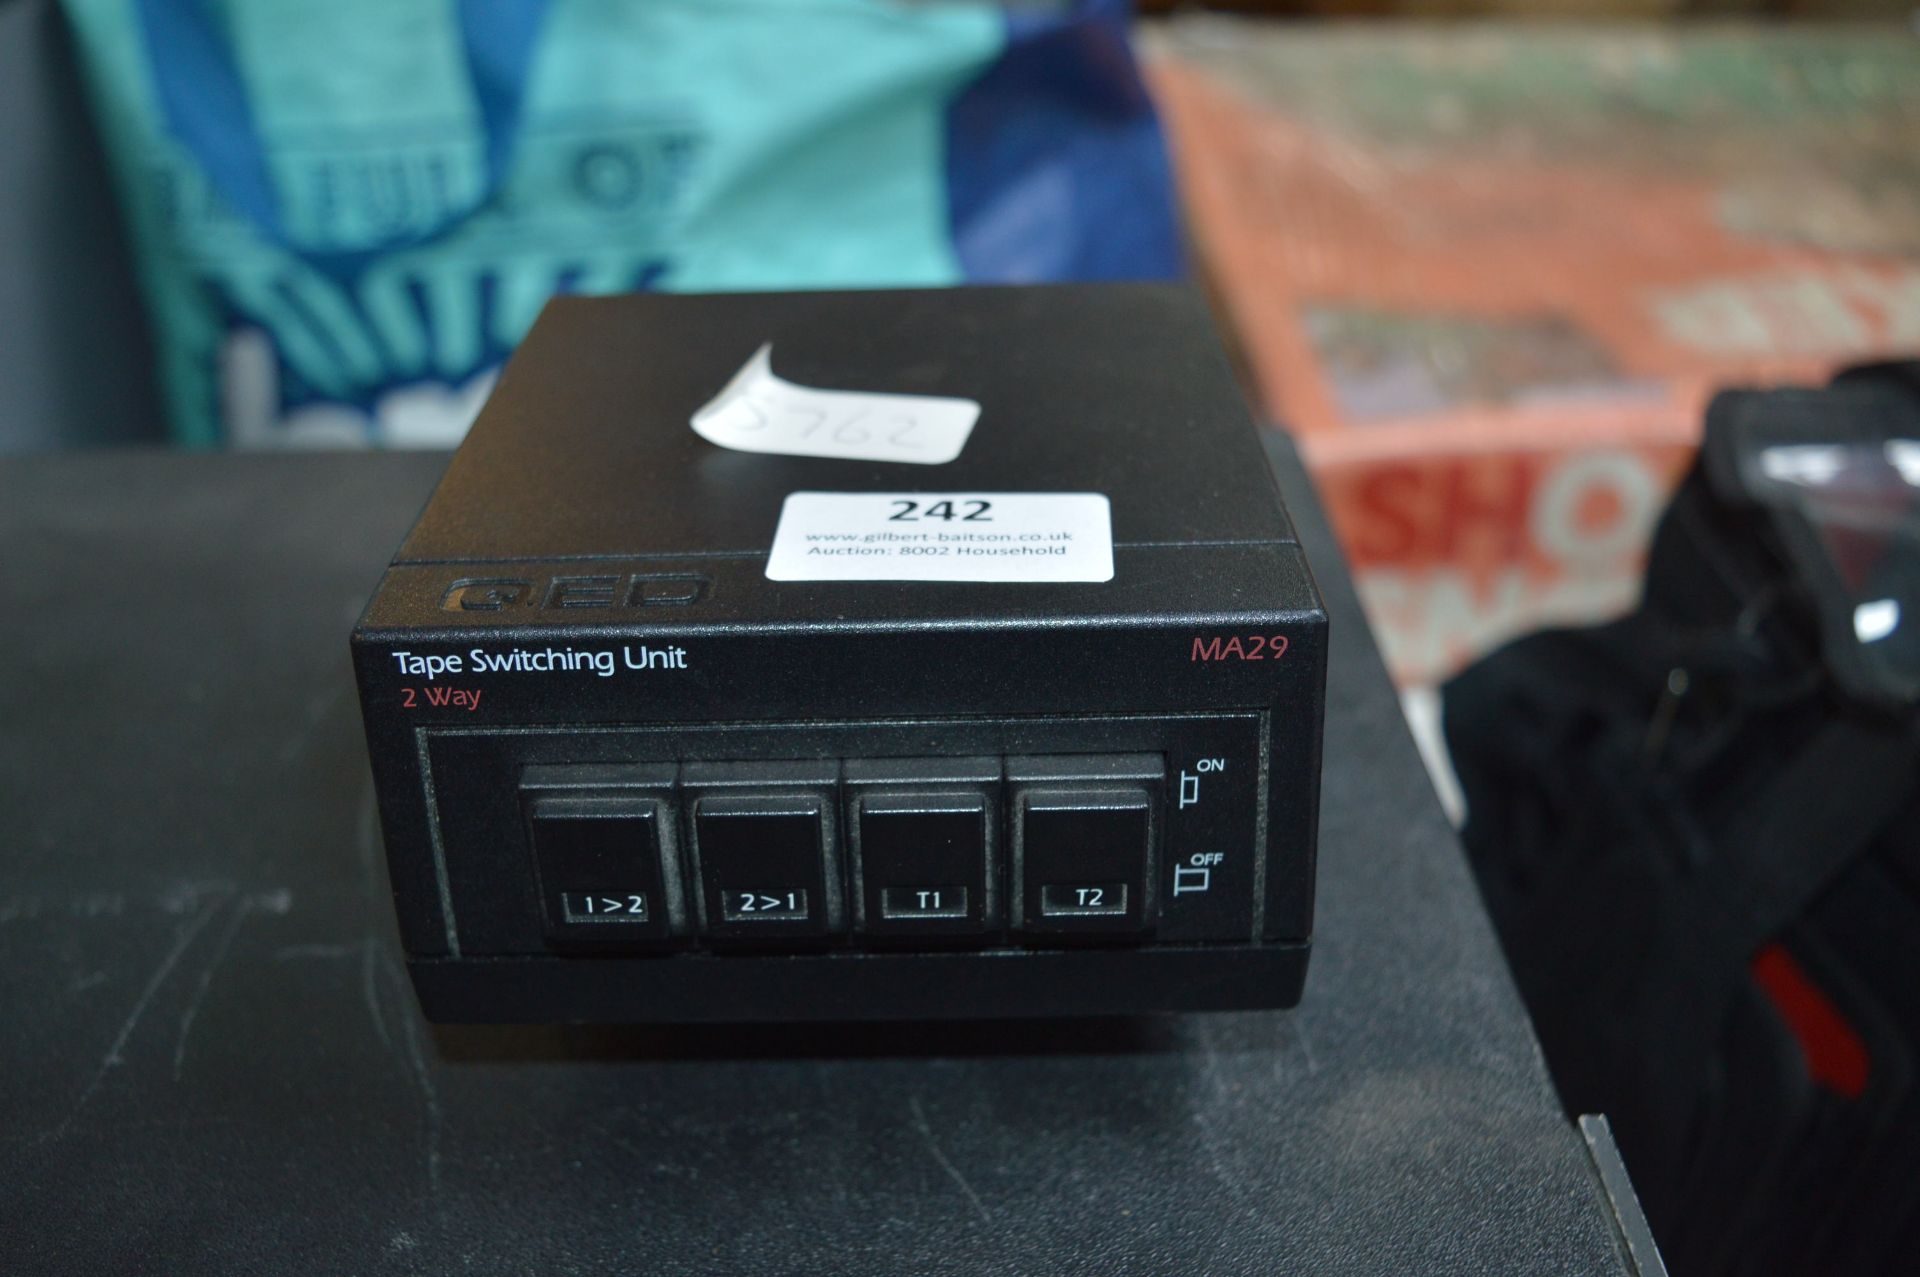 Qed MA29 Tape Switching Unit